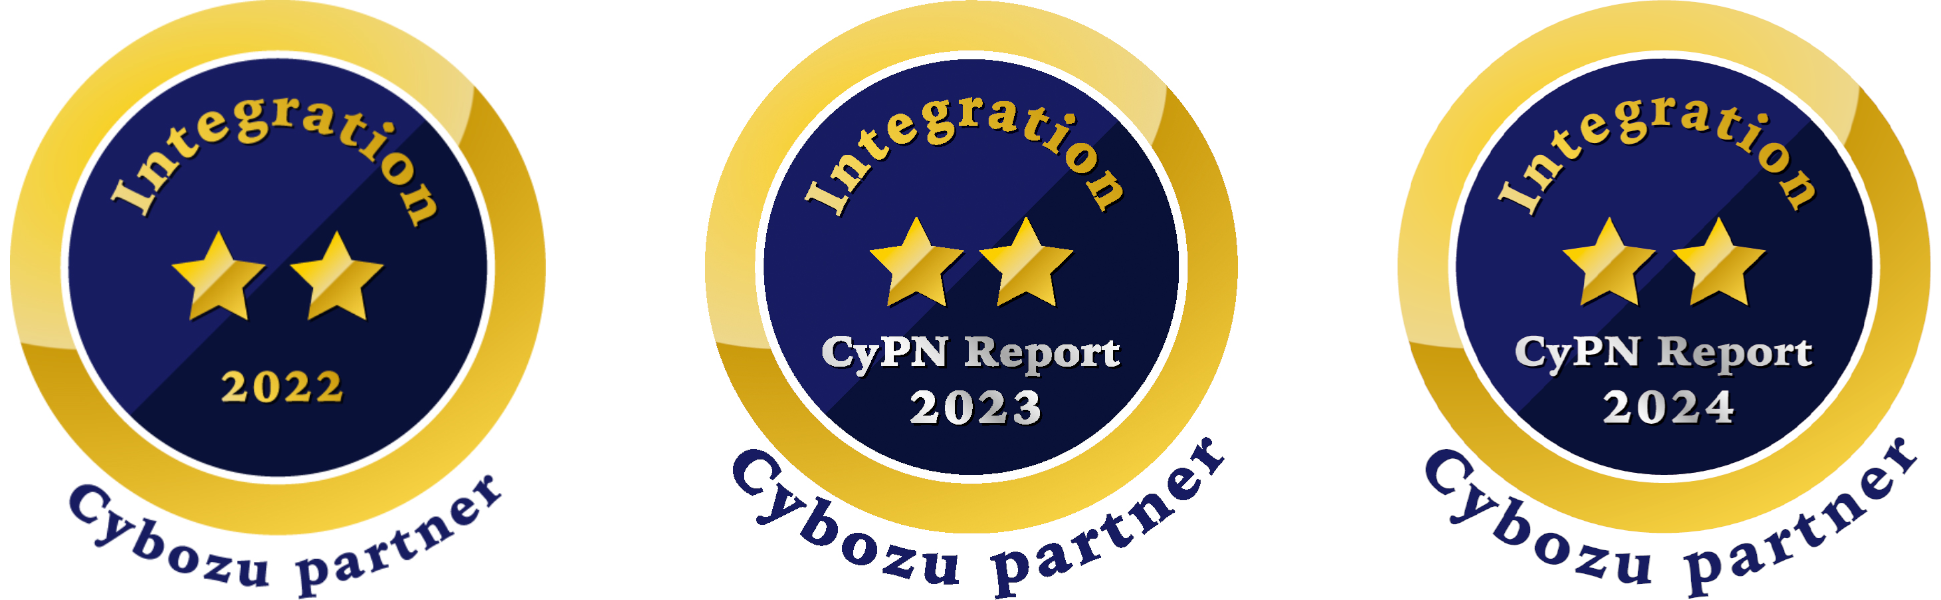 NXEwbhACybozu Partner Network Report 2024 łQl`CeO[VłRNAQ`